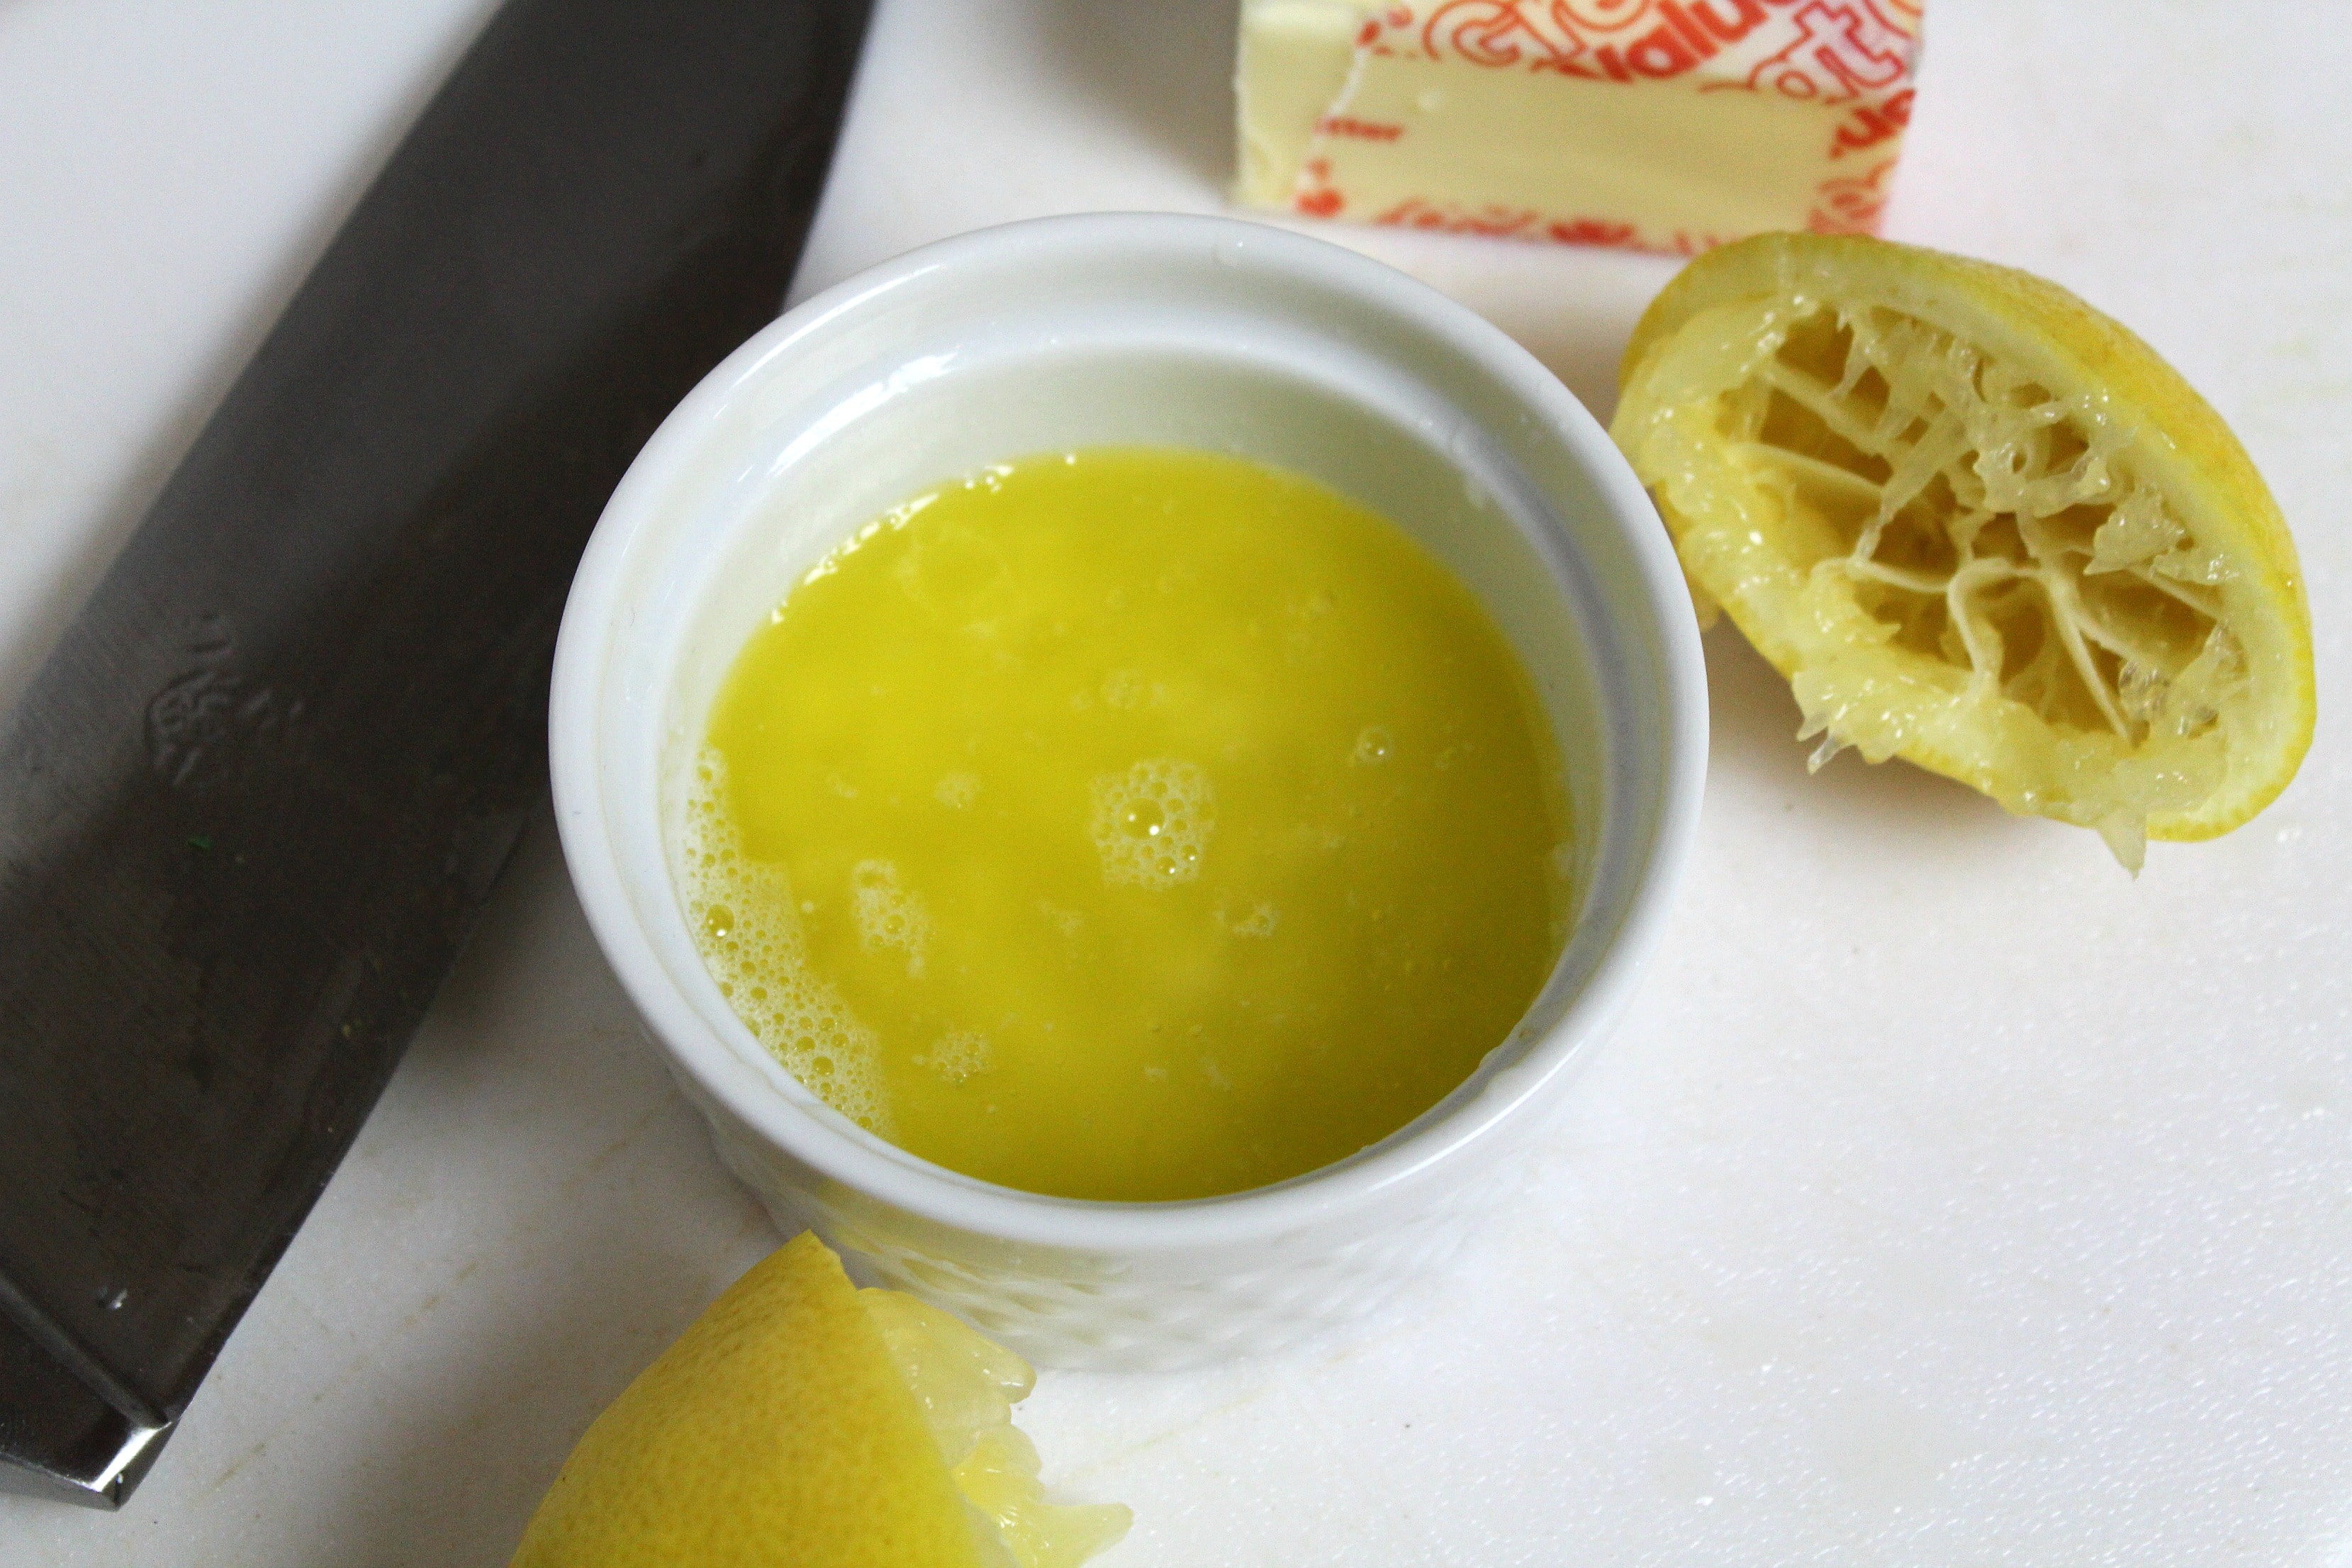 Combine juice of one lemon, butter, salt, and pepper together. 